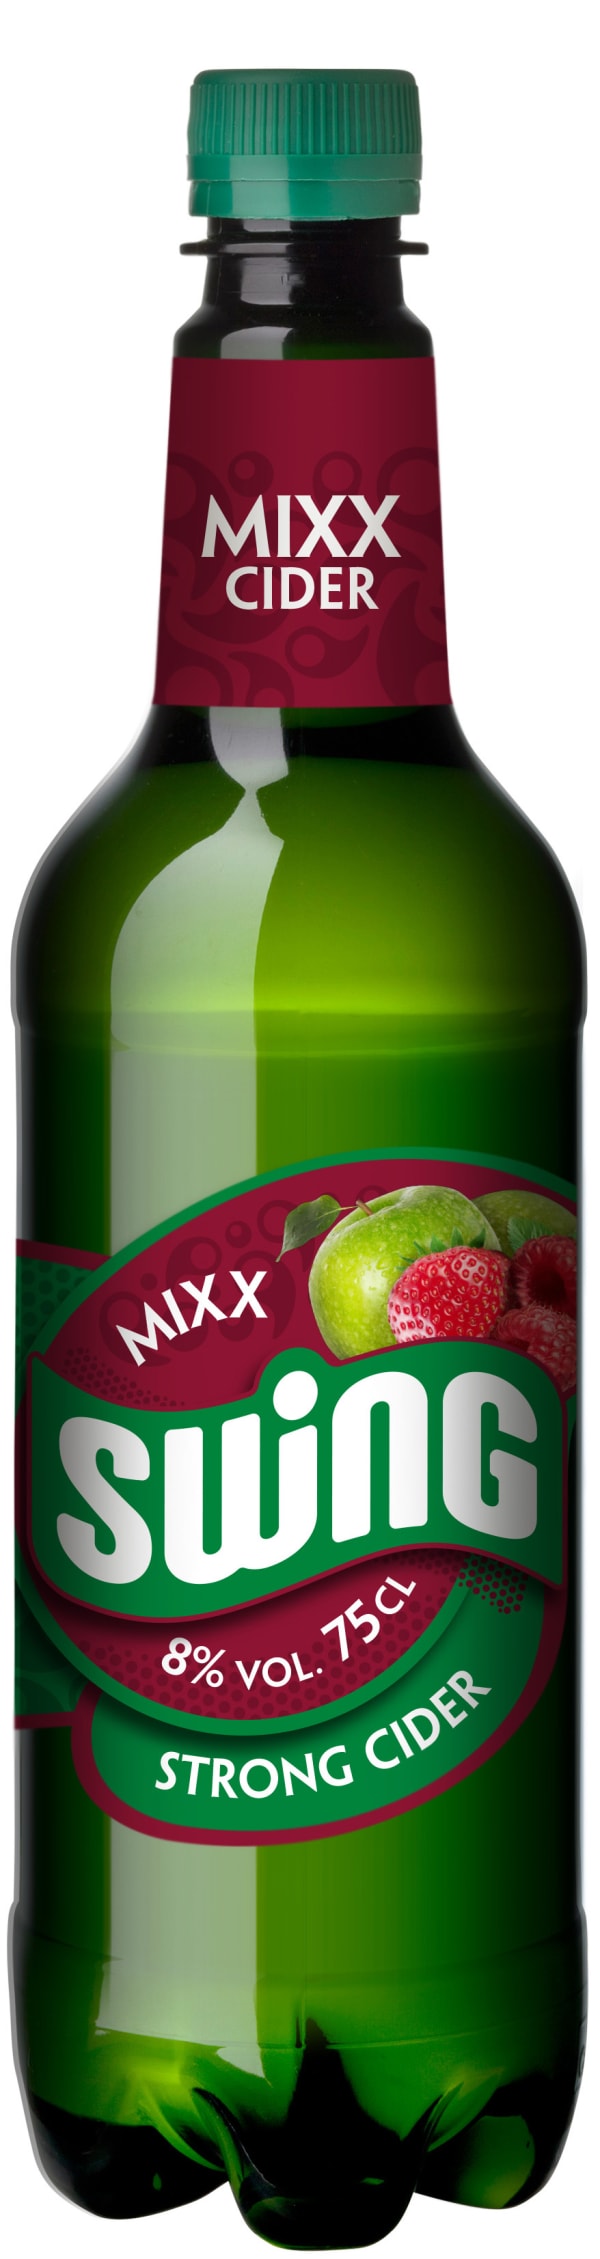 Swing Mixx Strong Cider muovipullo